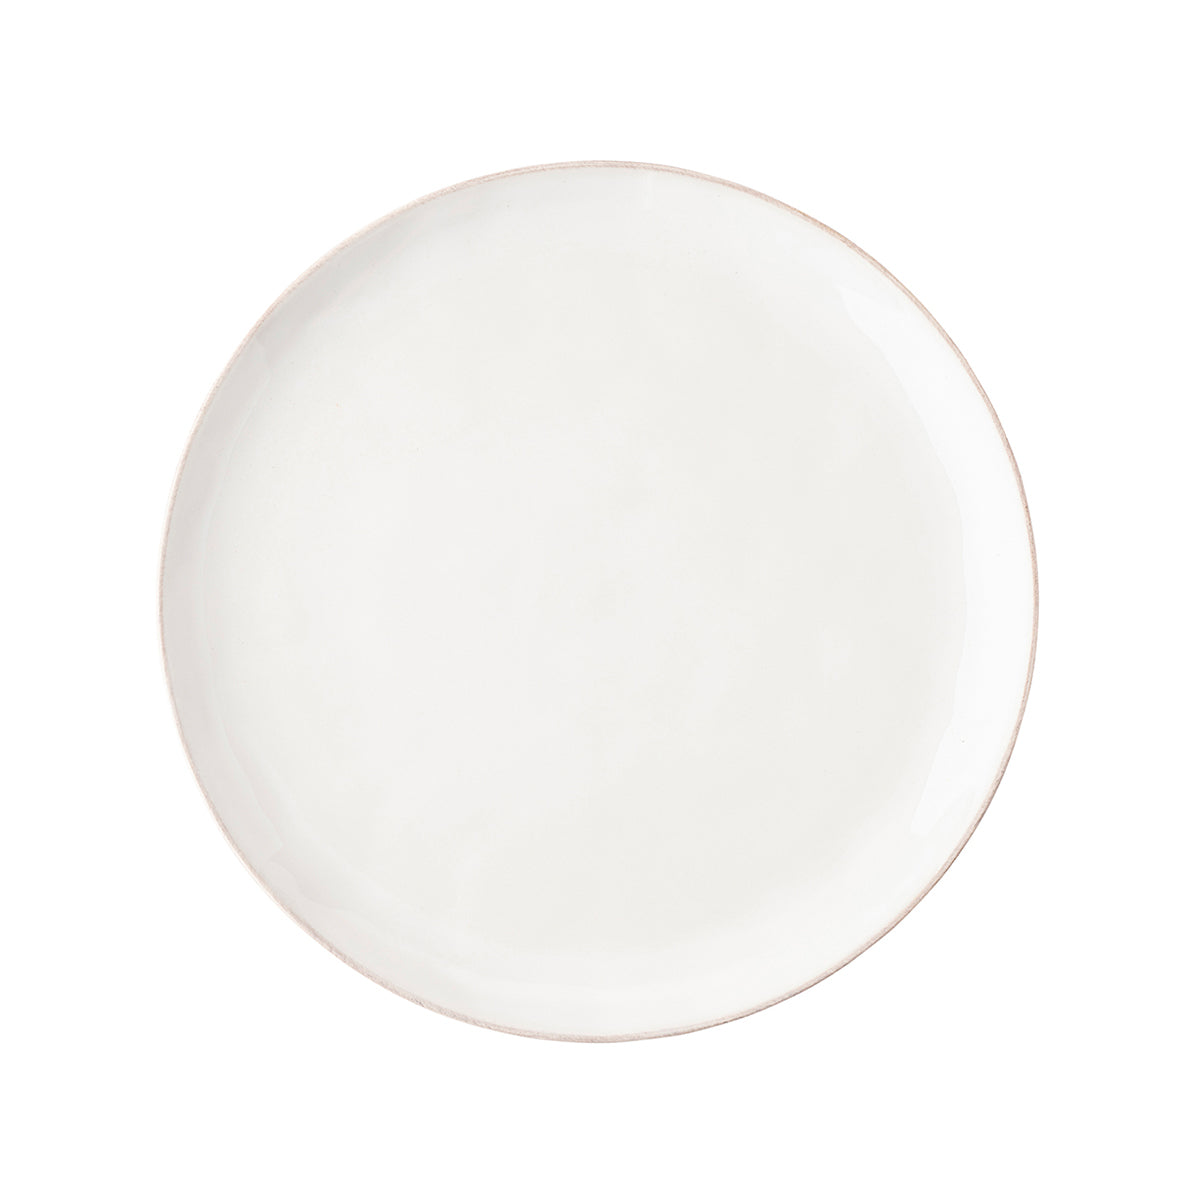 Puro Whitewash Coupe Dessert/Salad Plate